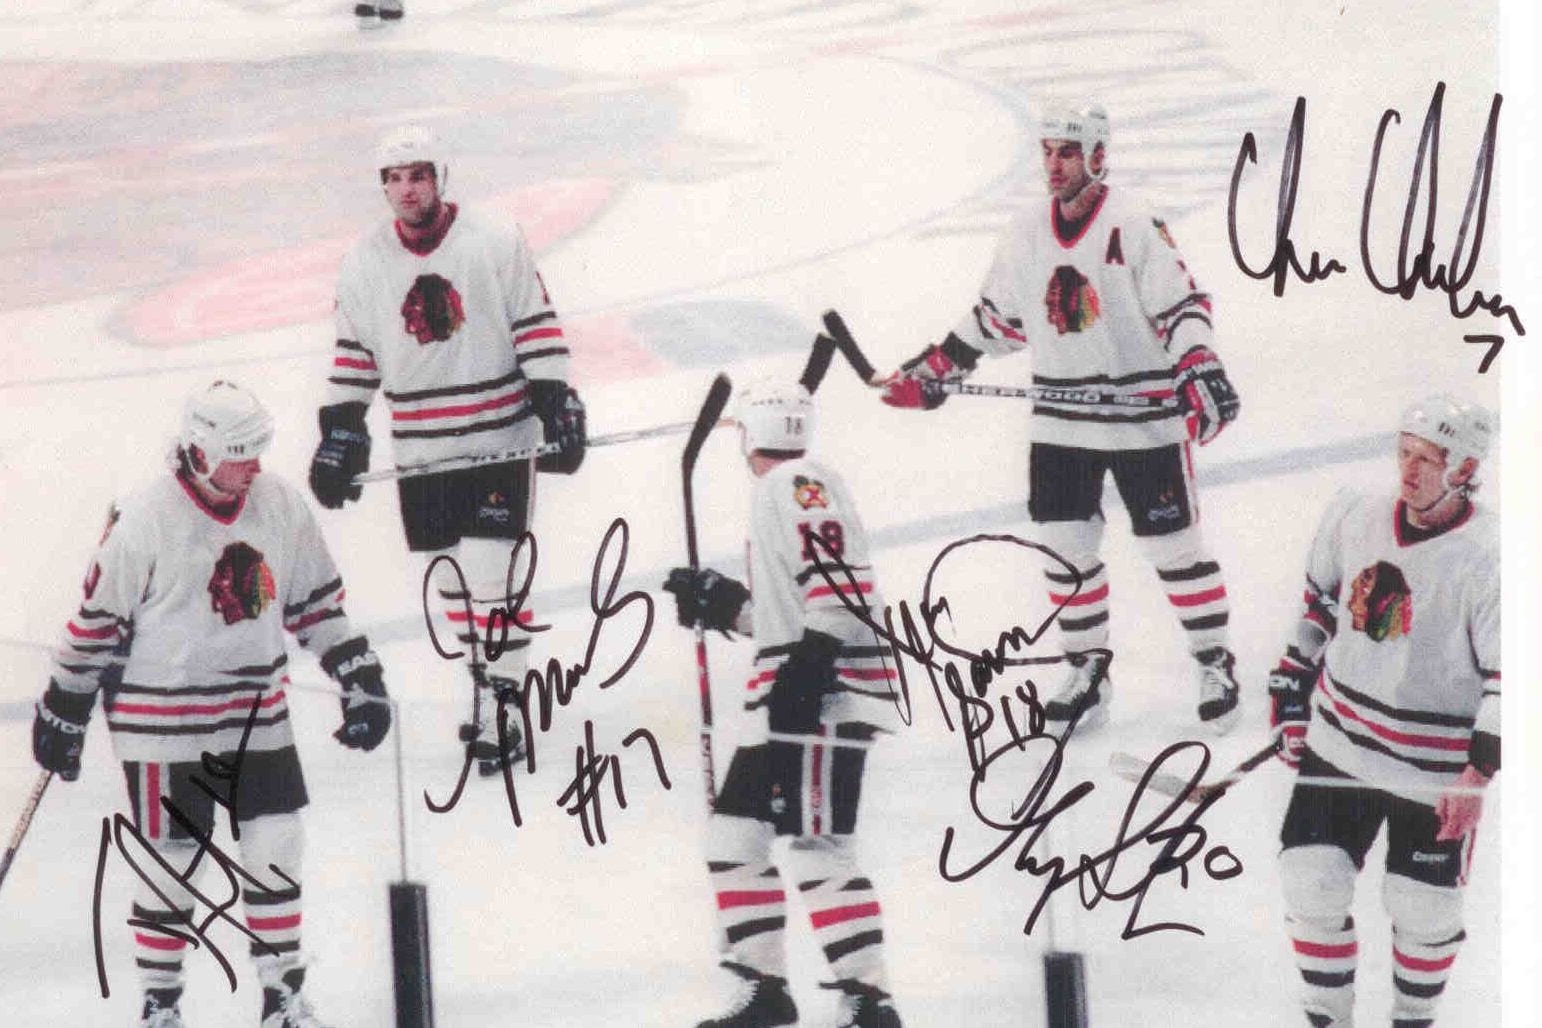 Autographs of ice hockey players